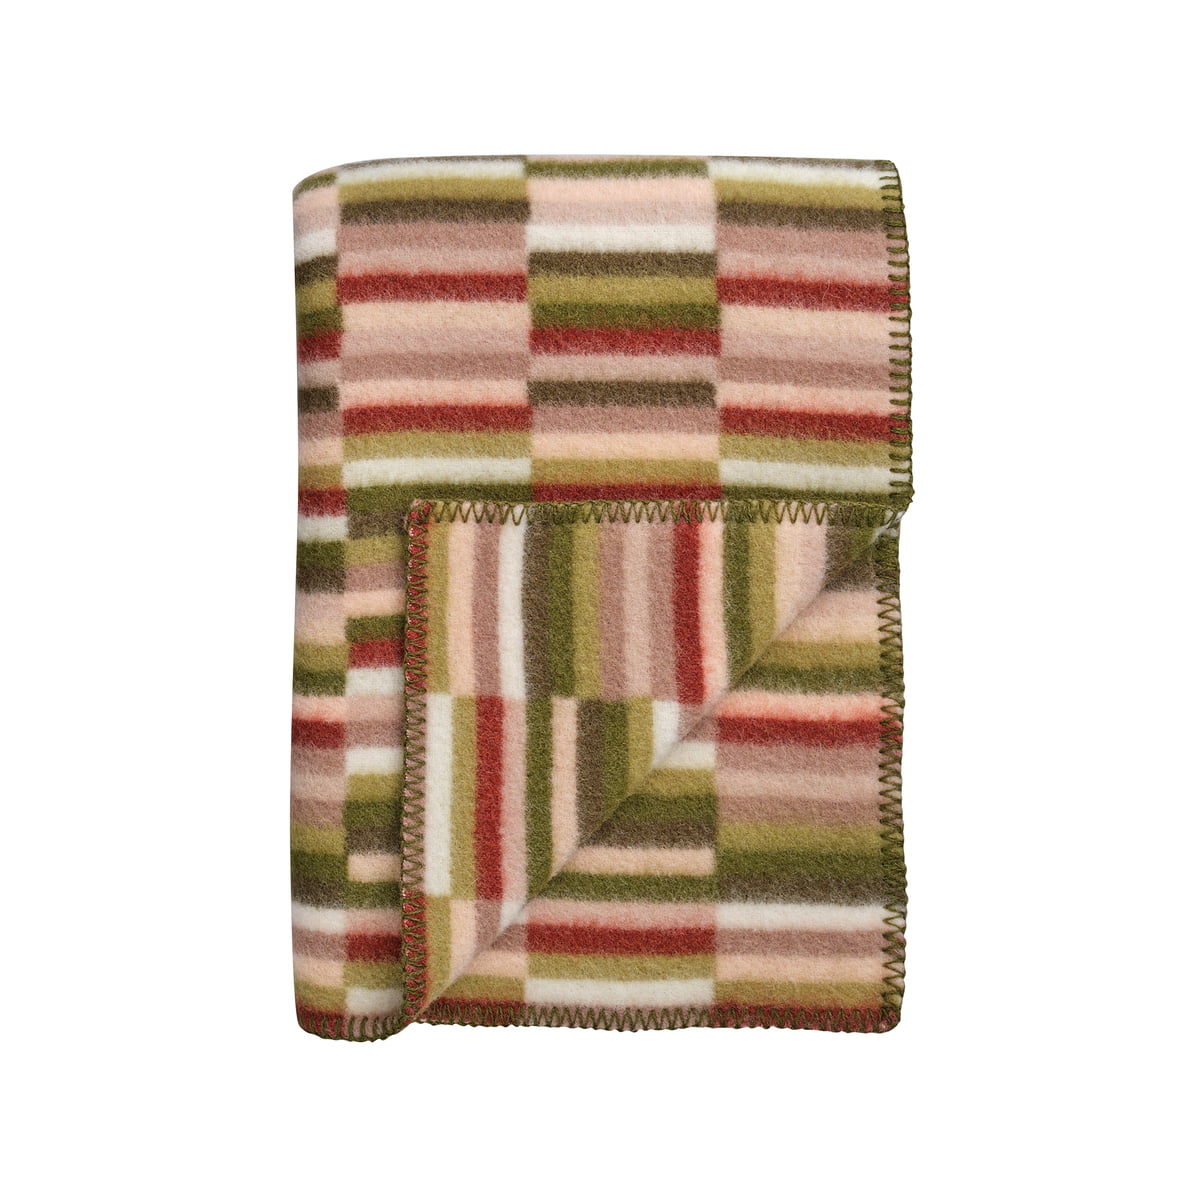 røros tweed - ida couverture en laine 200 x 135 cm, olive bourgogne